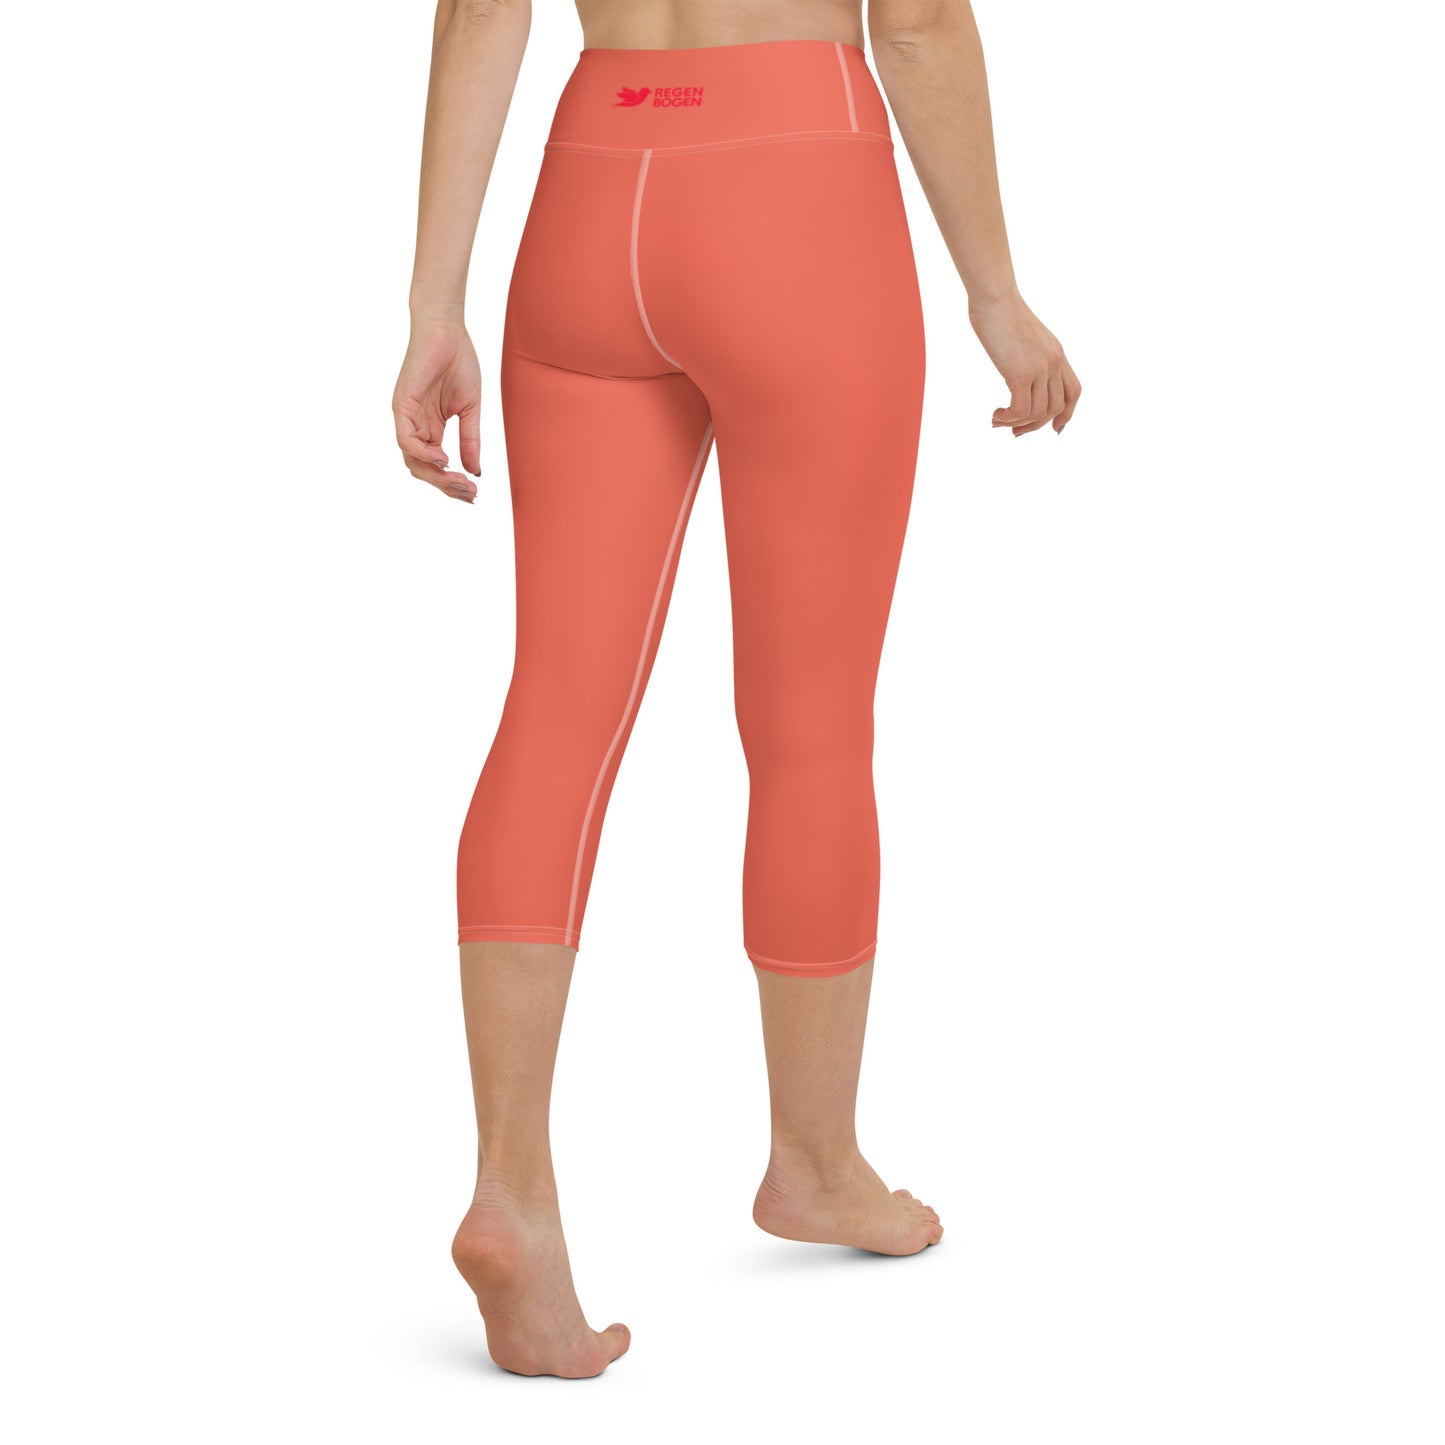 Sardinia Solid Melon Capri High Waist Yoga Leggings / Pants with Inside Pocket